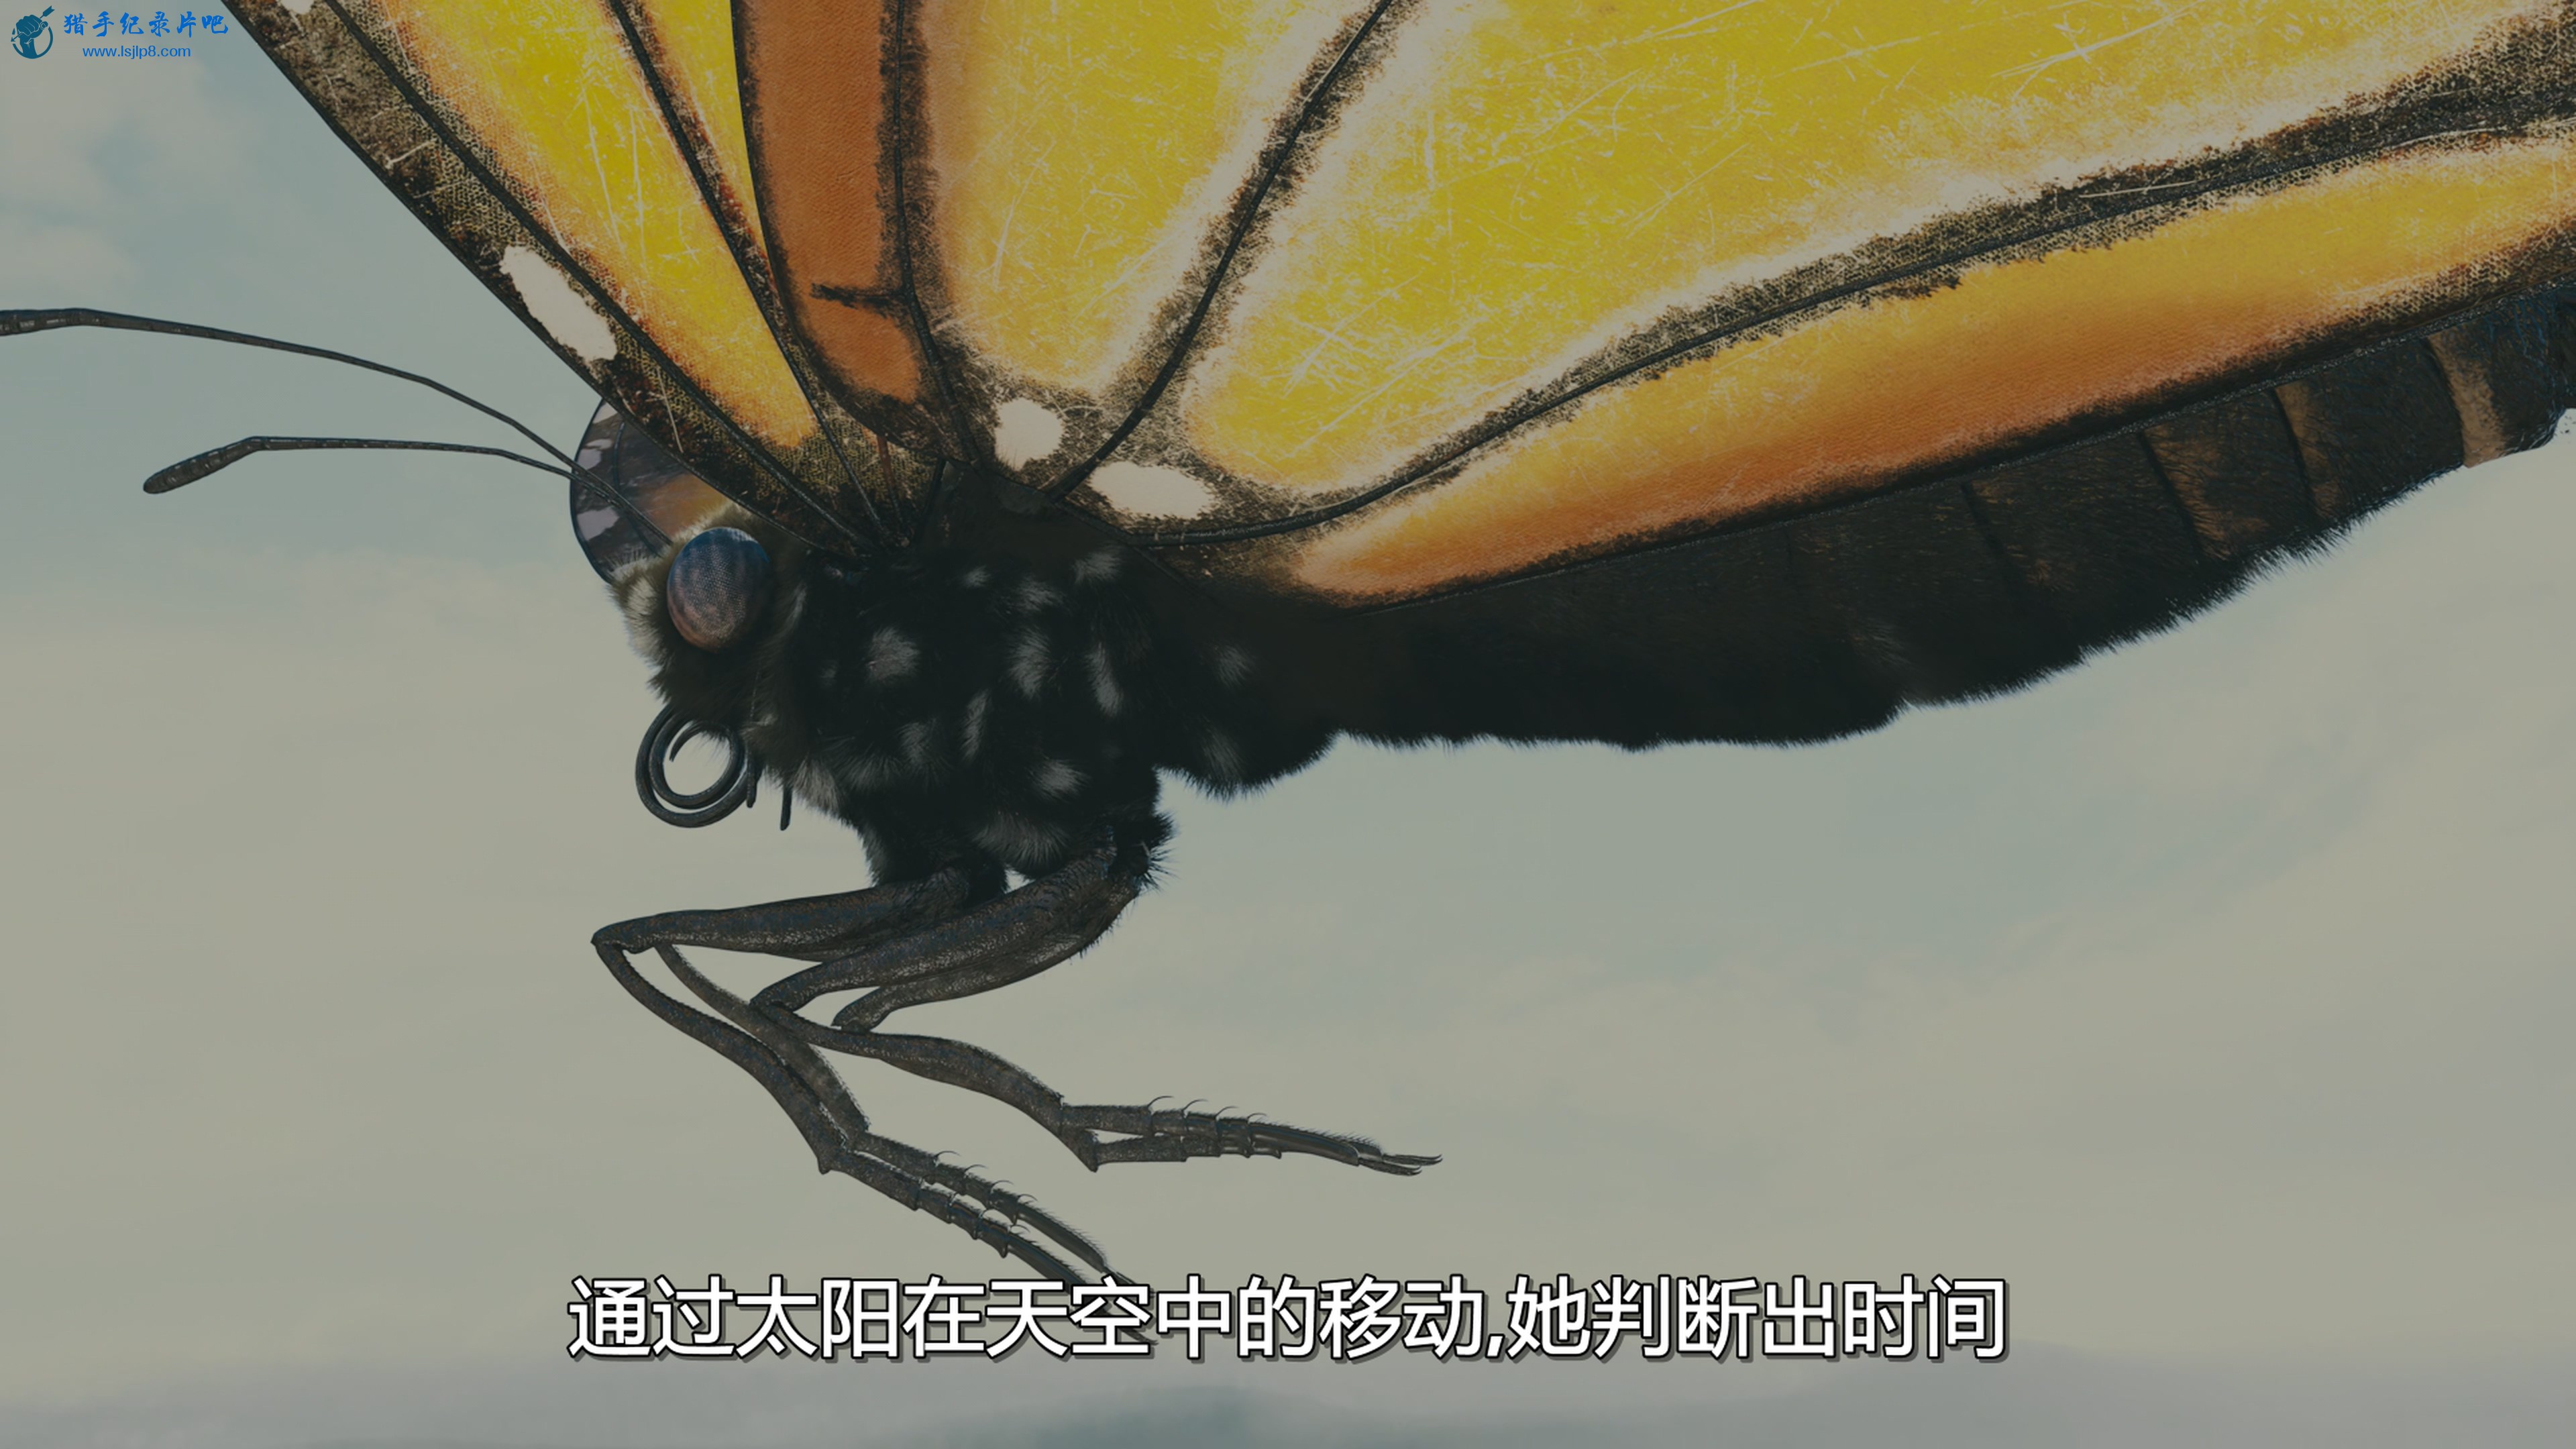 [Ǩ].Flight.of.the.Butterflies.2012.UHD.2160P.x265.10bit.HDR.English.A.jpg